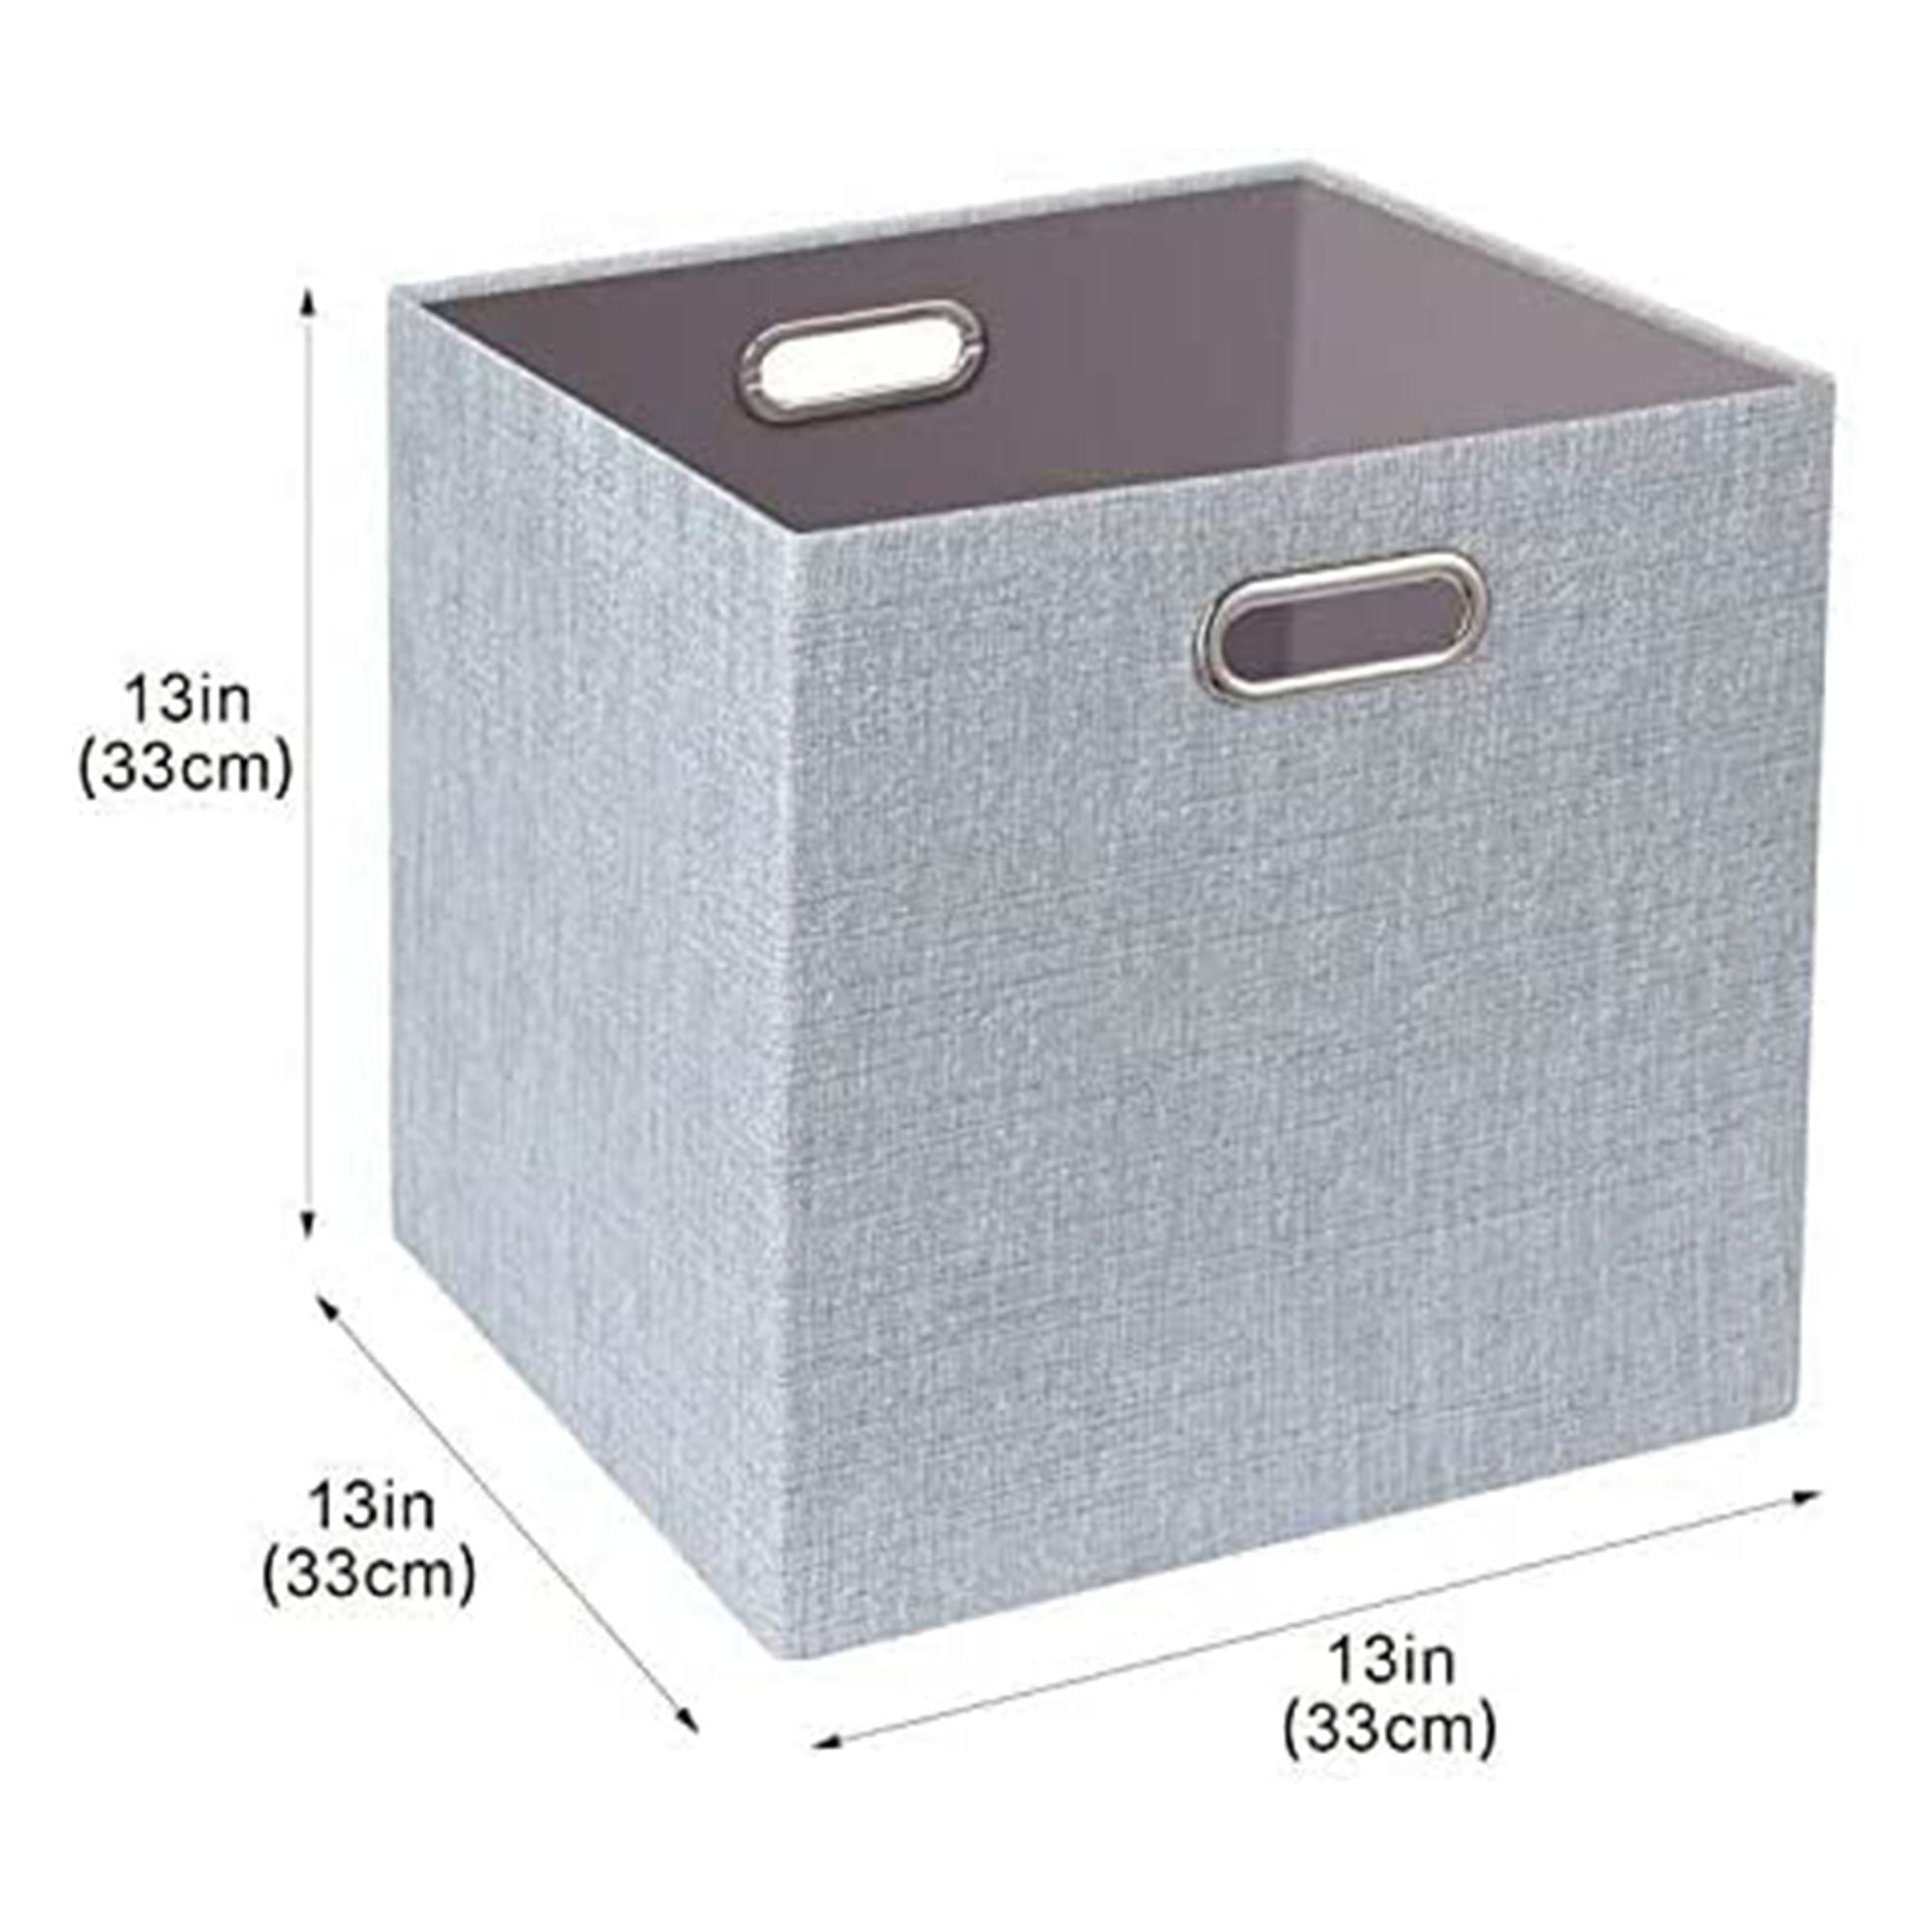  Posprica Storage Cubes, 12×12 Collapsible Storage